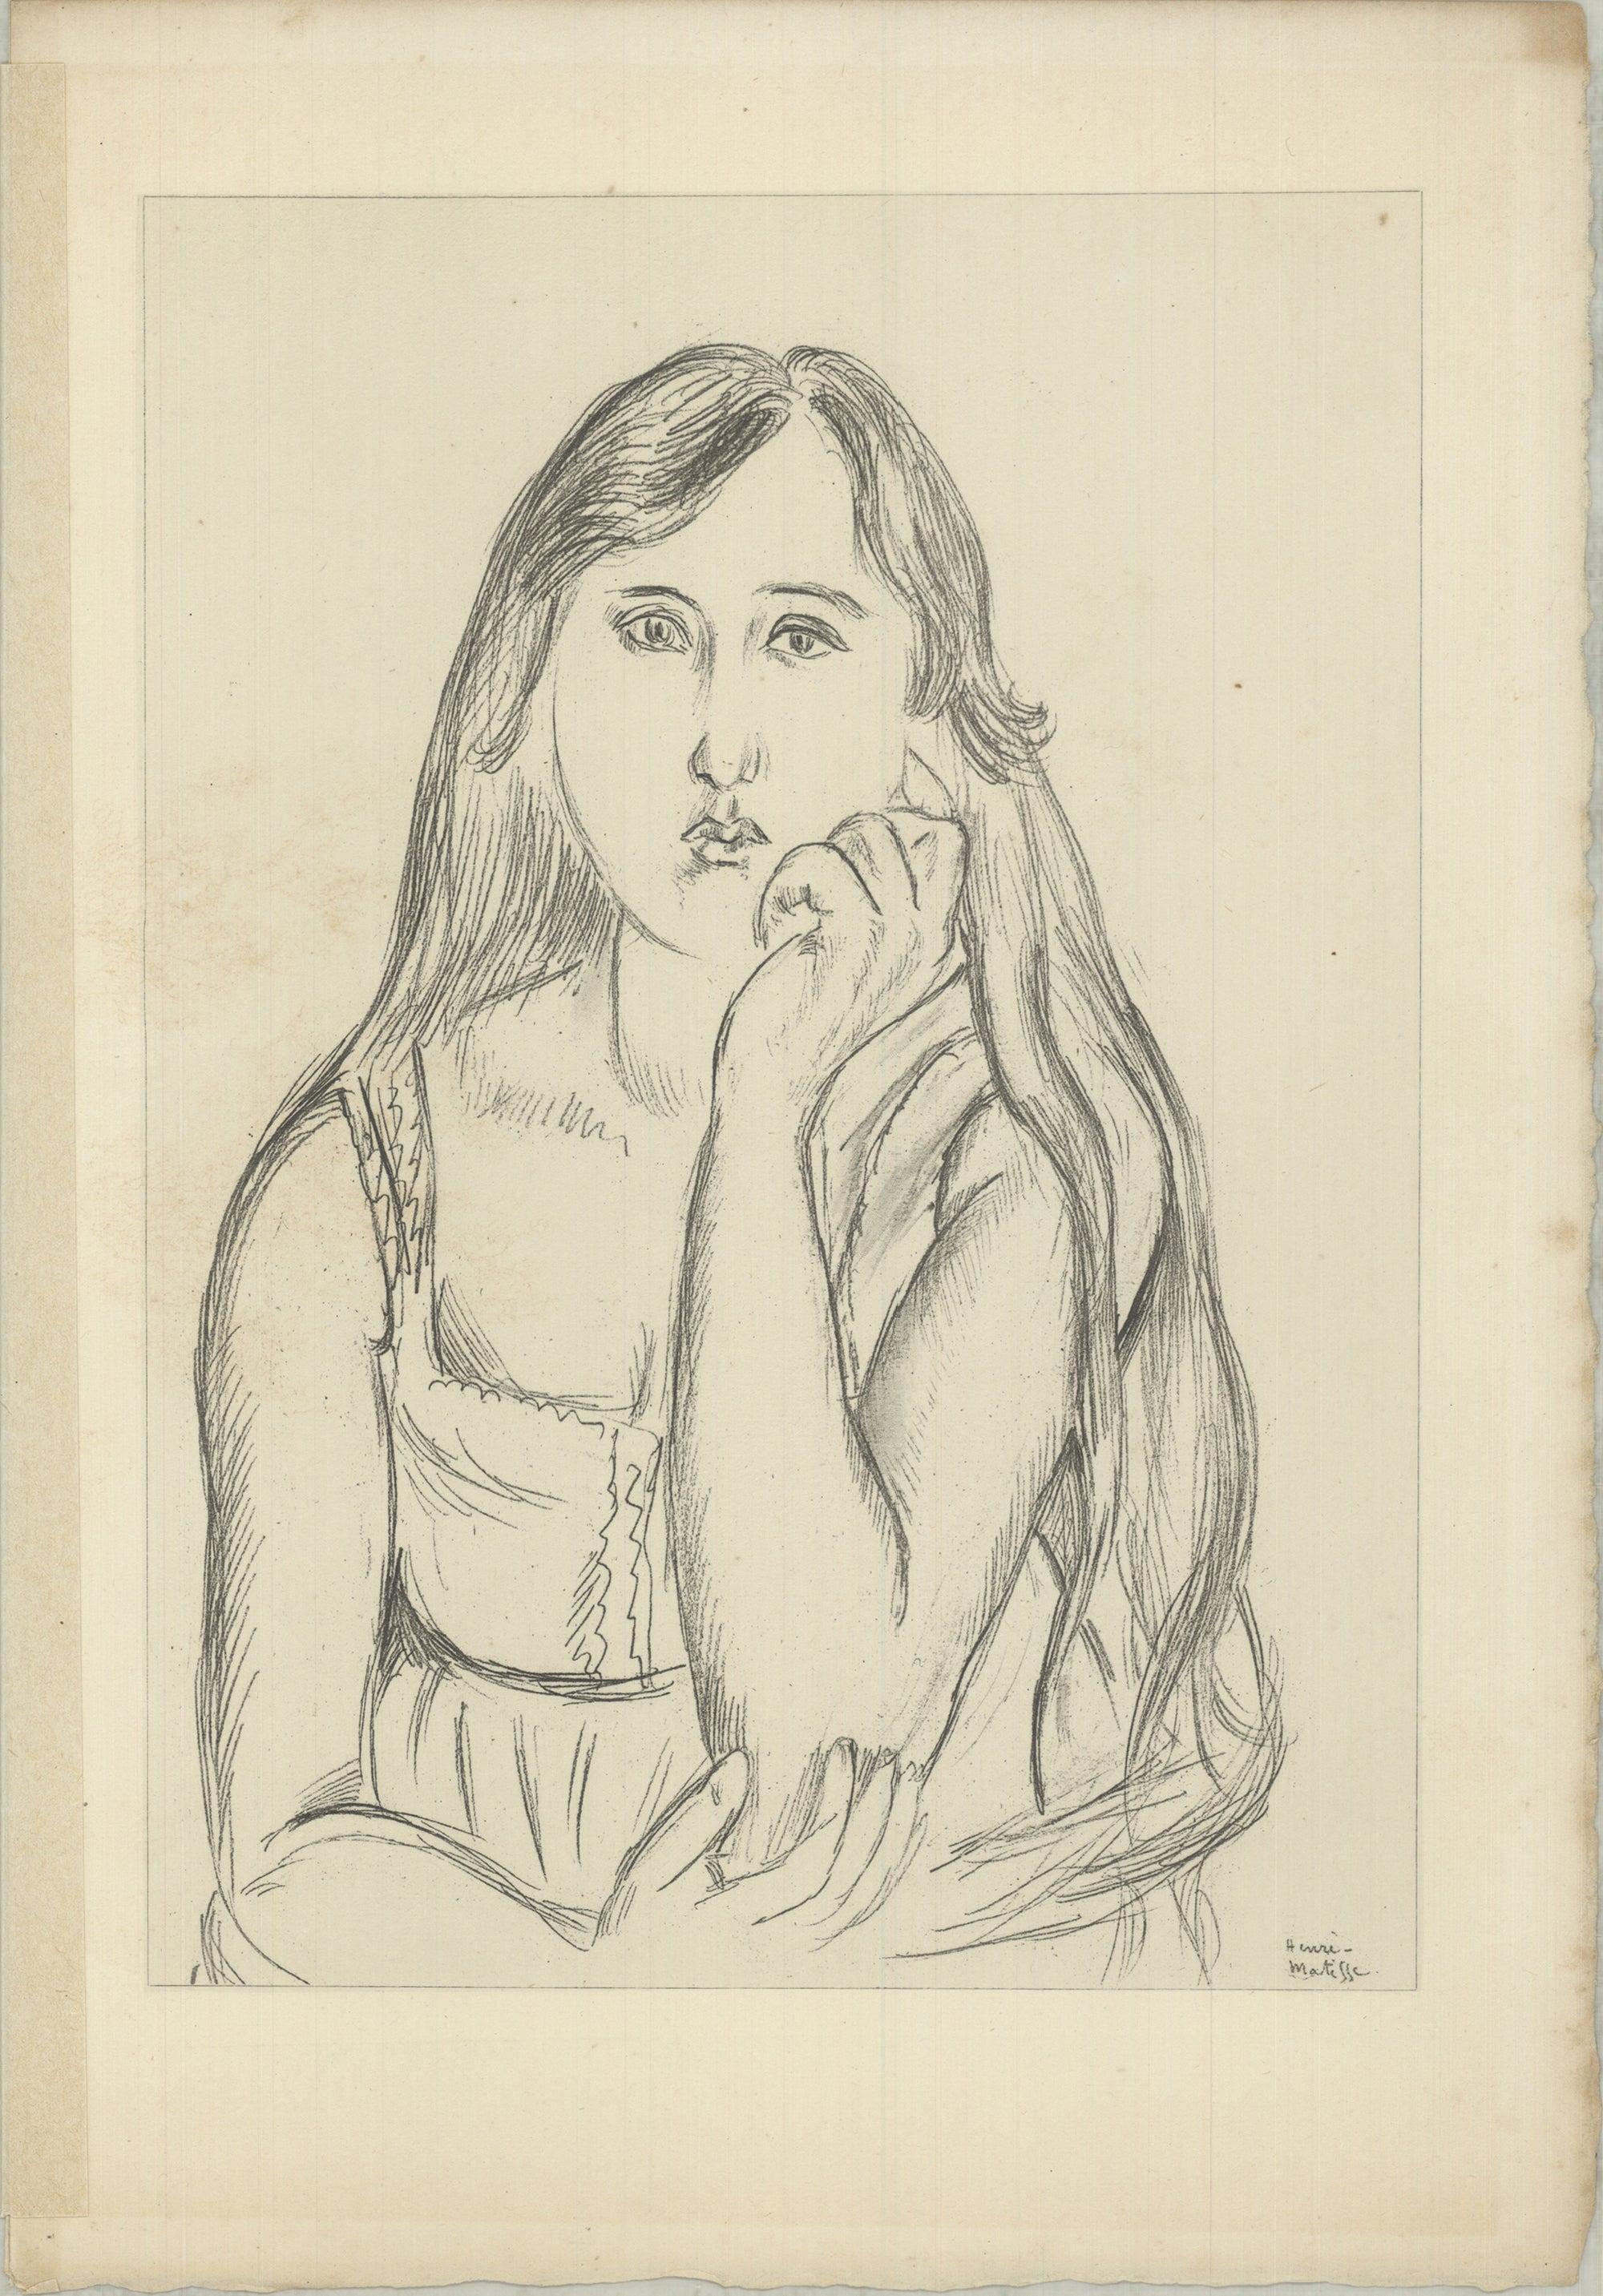 HENRI MATISSE Planche XLVII, 1920, Lithograph, FIRST EDITION - Print by Henri Matisse